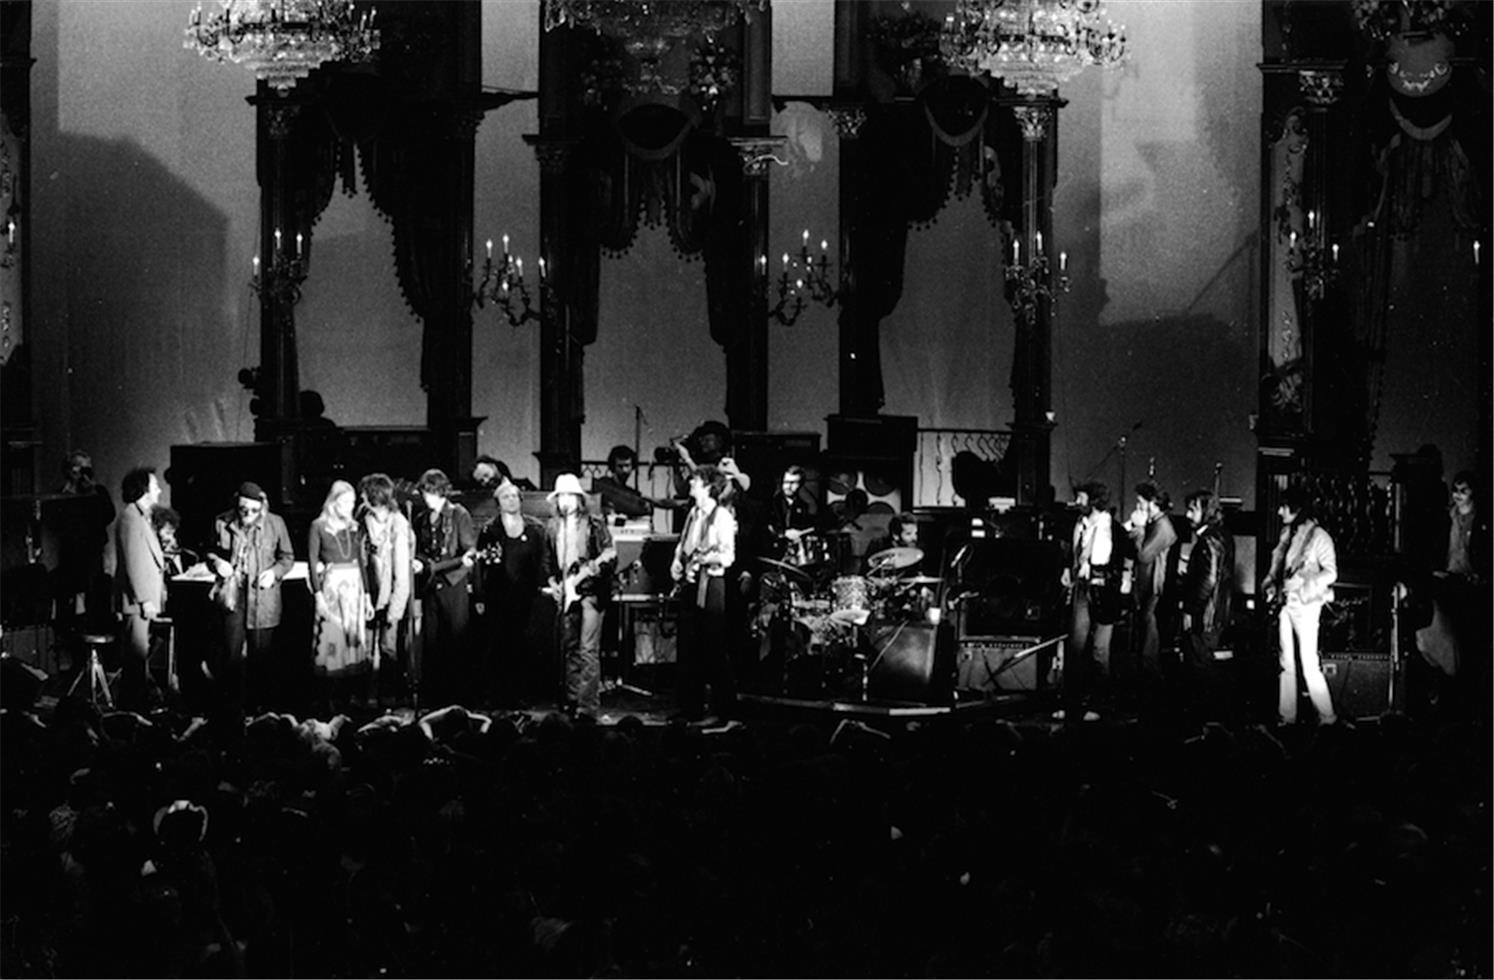 Ken Regan Black and White Photograph - The Band, The Last Waltz, San Francisco, CA, 1976